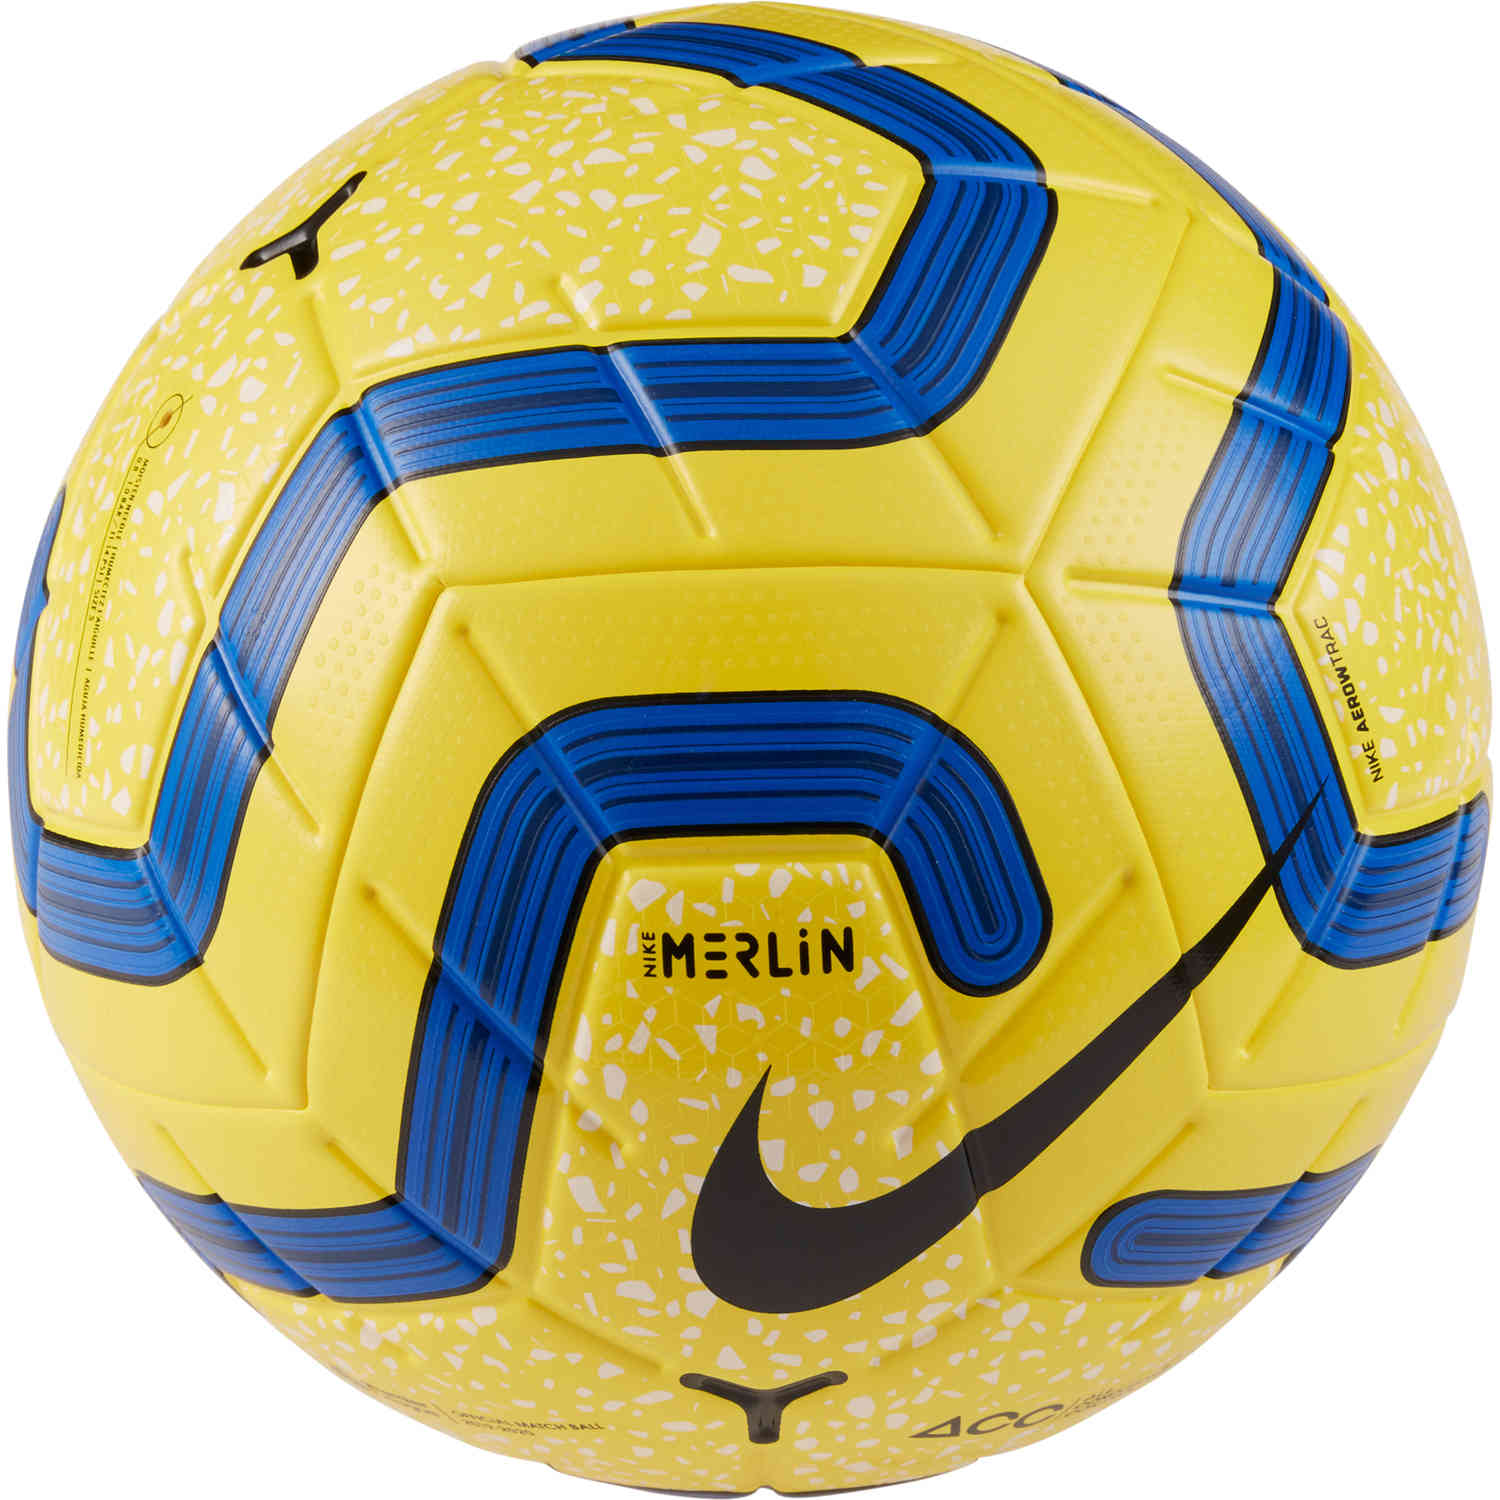 Nike Hi-vis Premier League Merlin Official Match Soccer Ball Yellow/Blue/Black SoccerPro